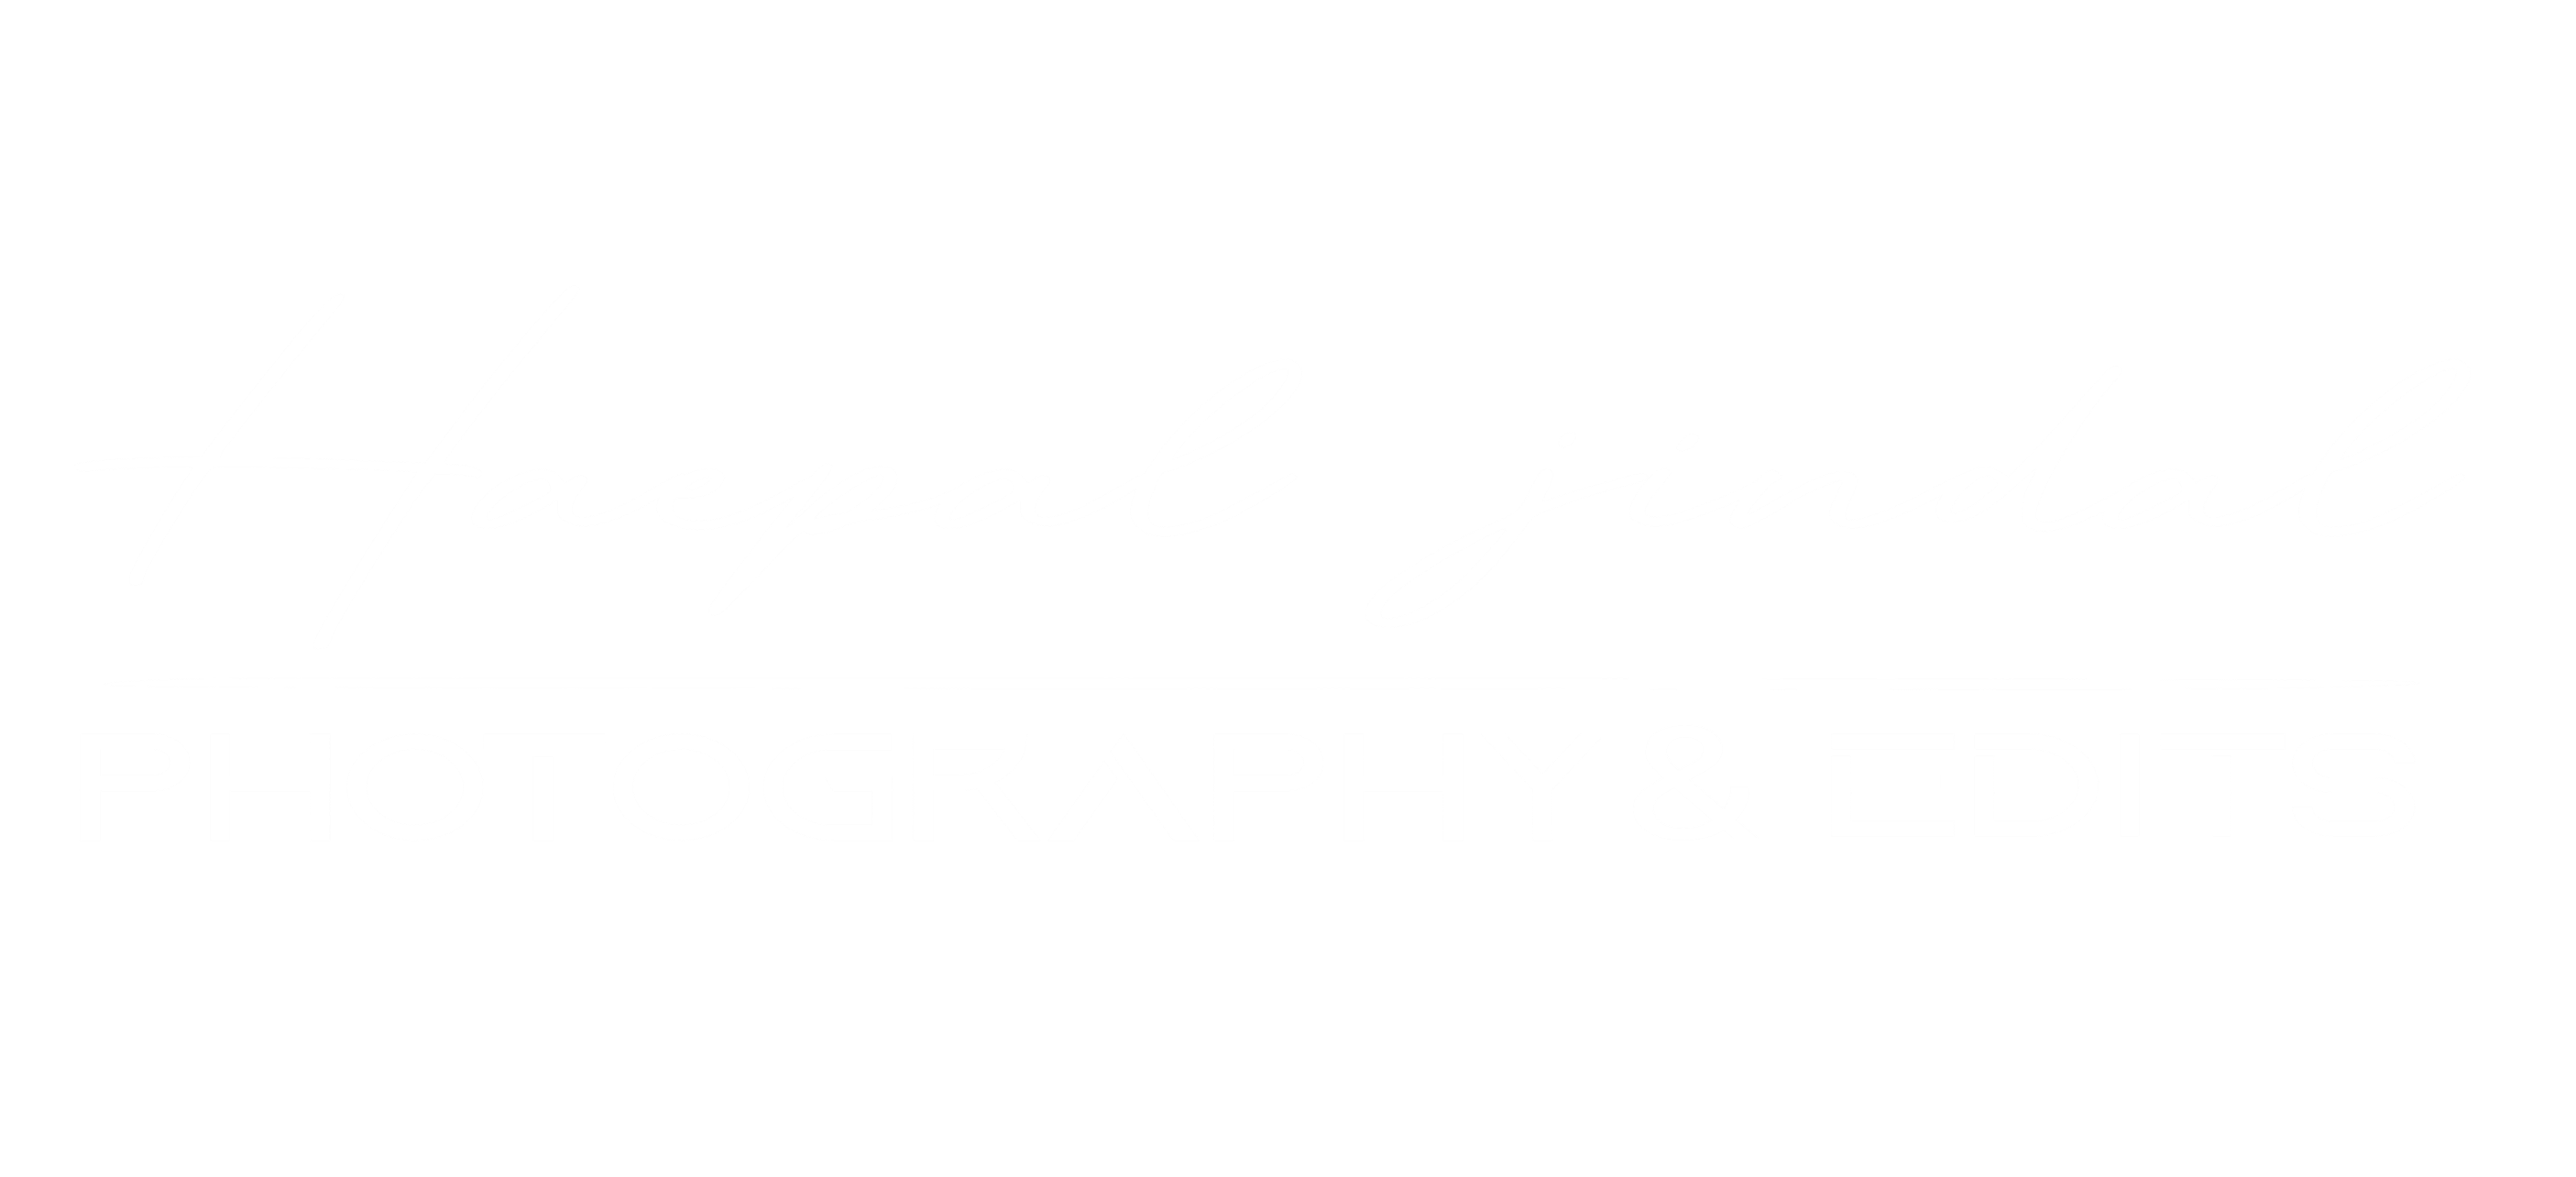 2811x1284 Photography Logo